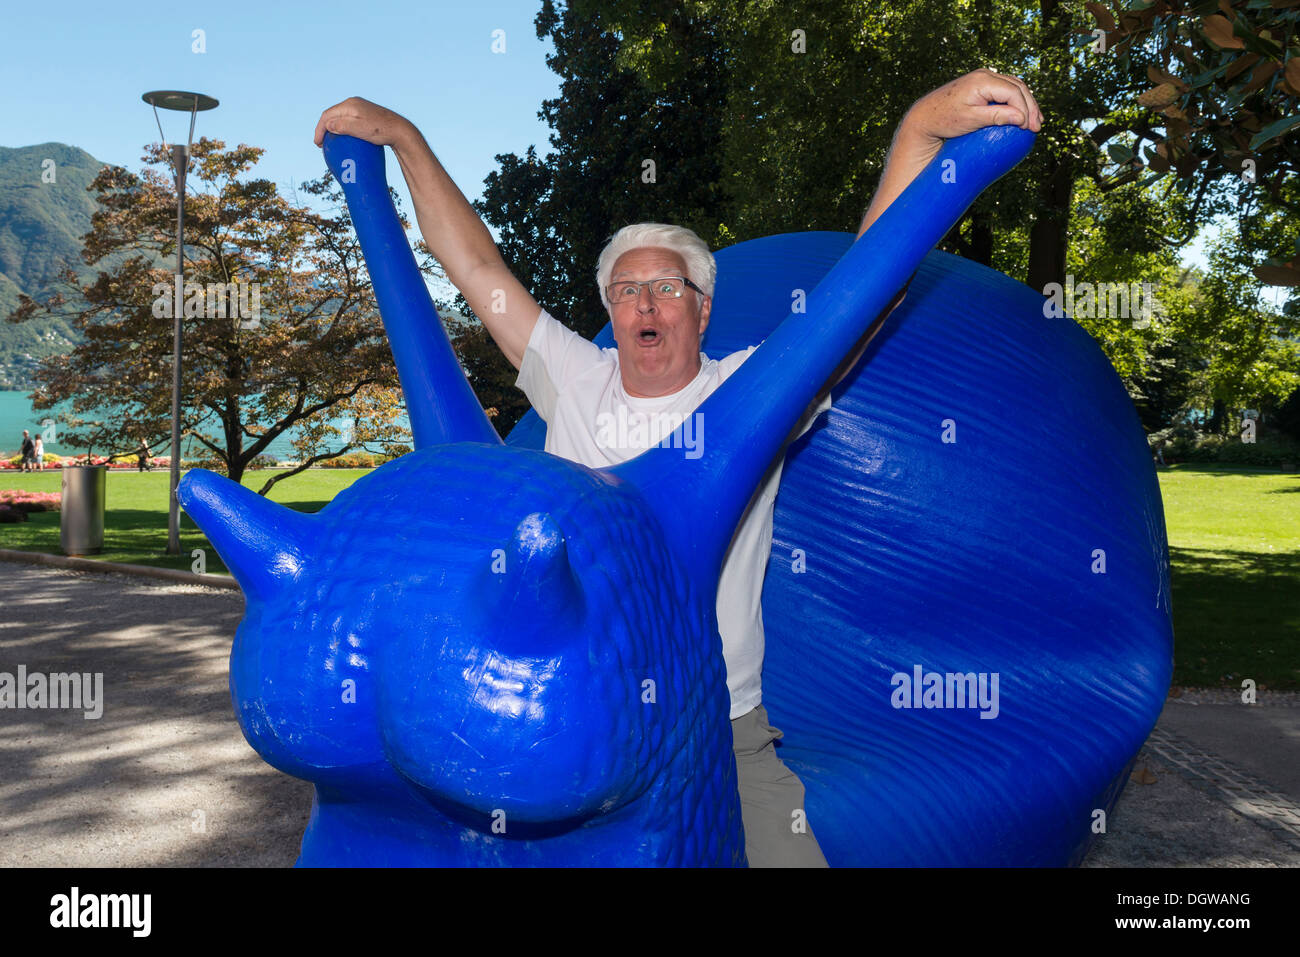 A man pretending to ride a giant blue snail sculpture. Lugano. Switzerland Stock Photo